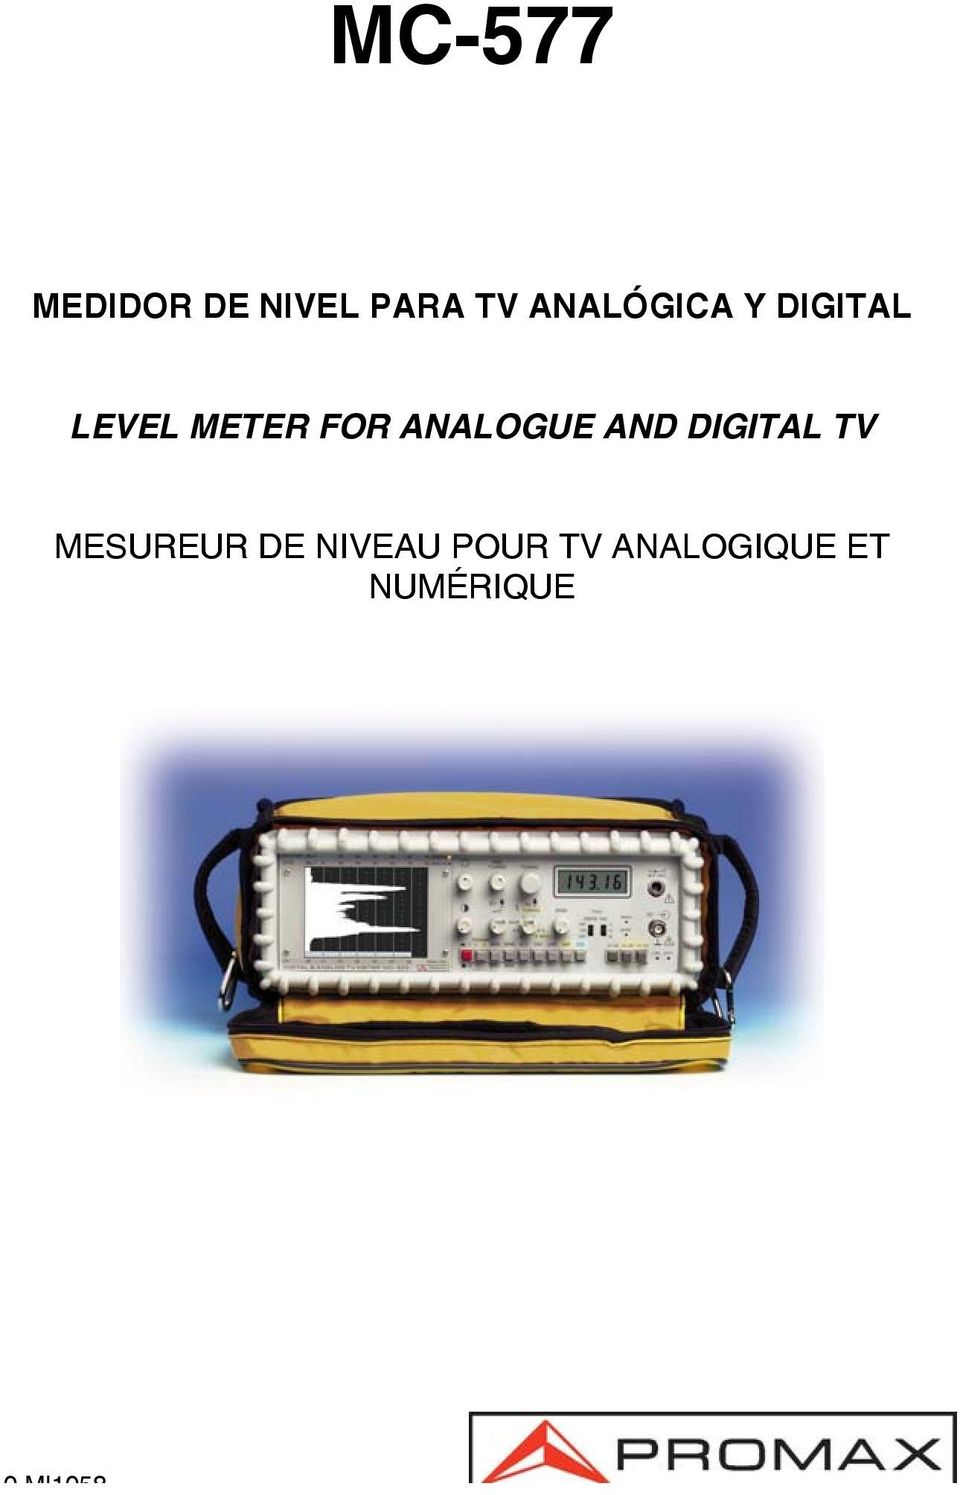 ANALOGUE AND DIGITAL TV MESUREUR DE